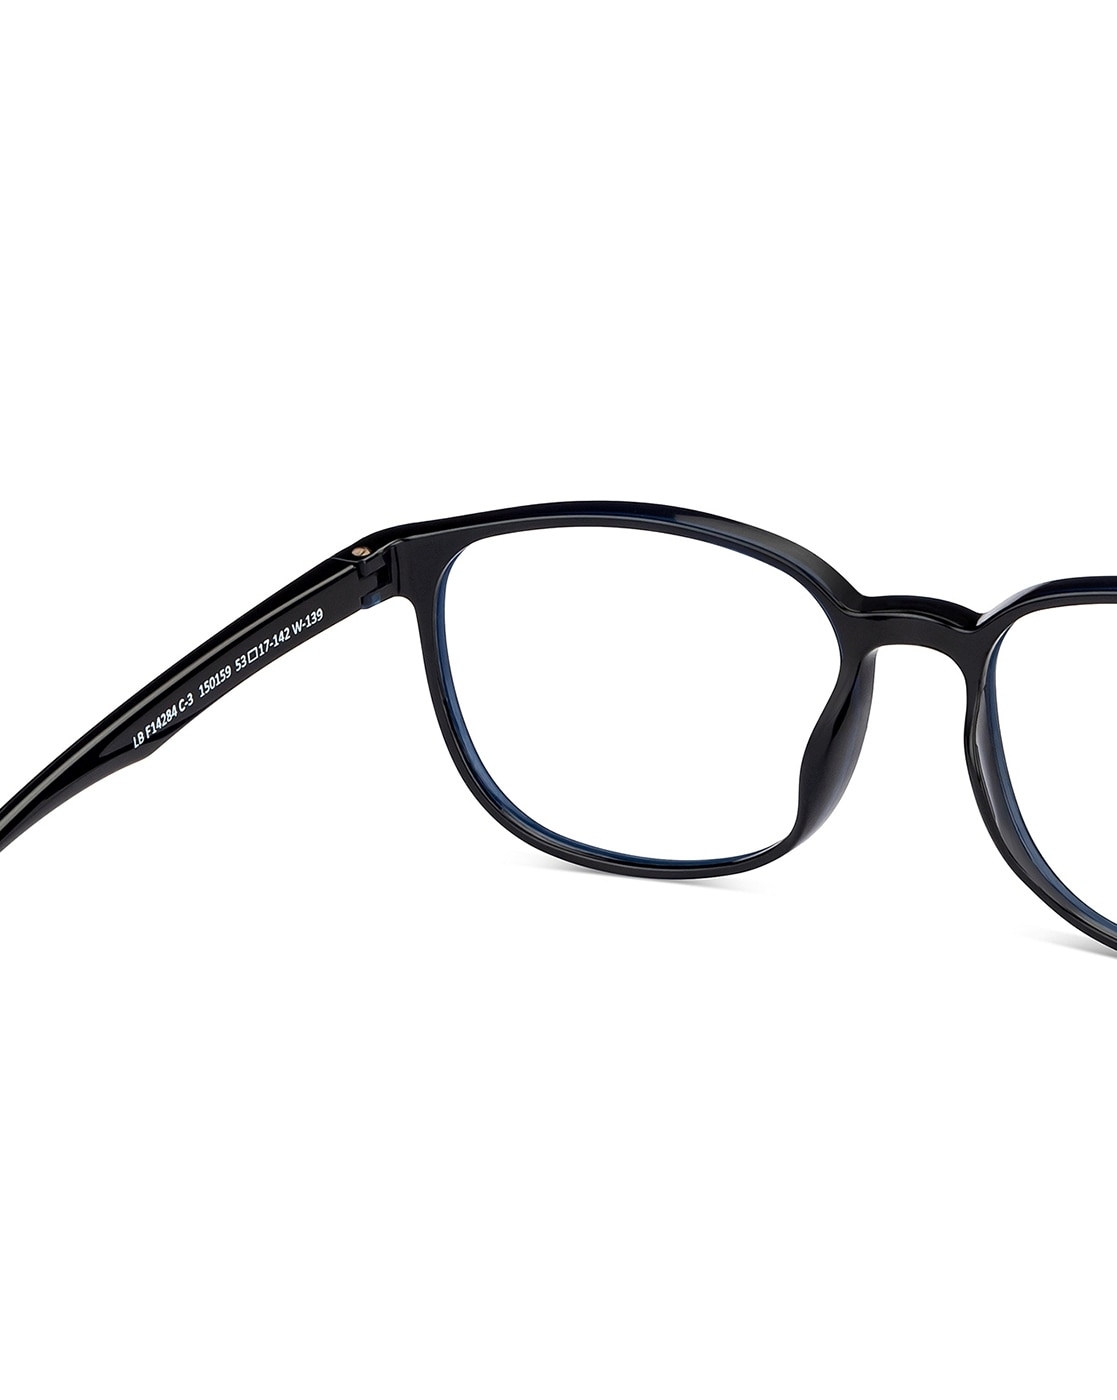 Buy Blue Block Screen Glasses: Orange Transparent Full Rim Round Lenskart  Blu LB E14060-C18 Eyeglasses at Lenskart.com